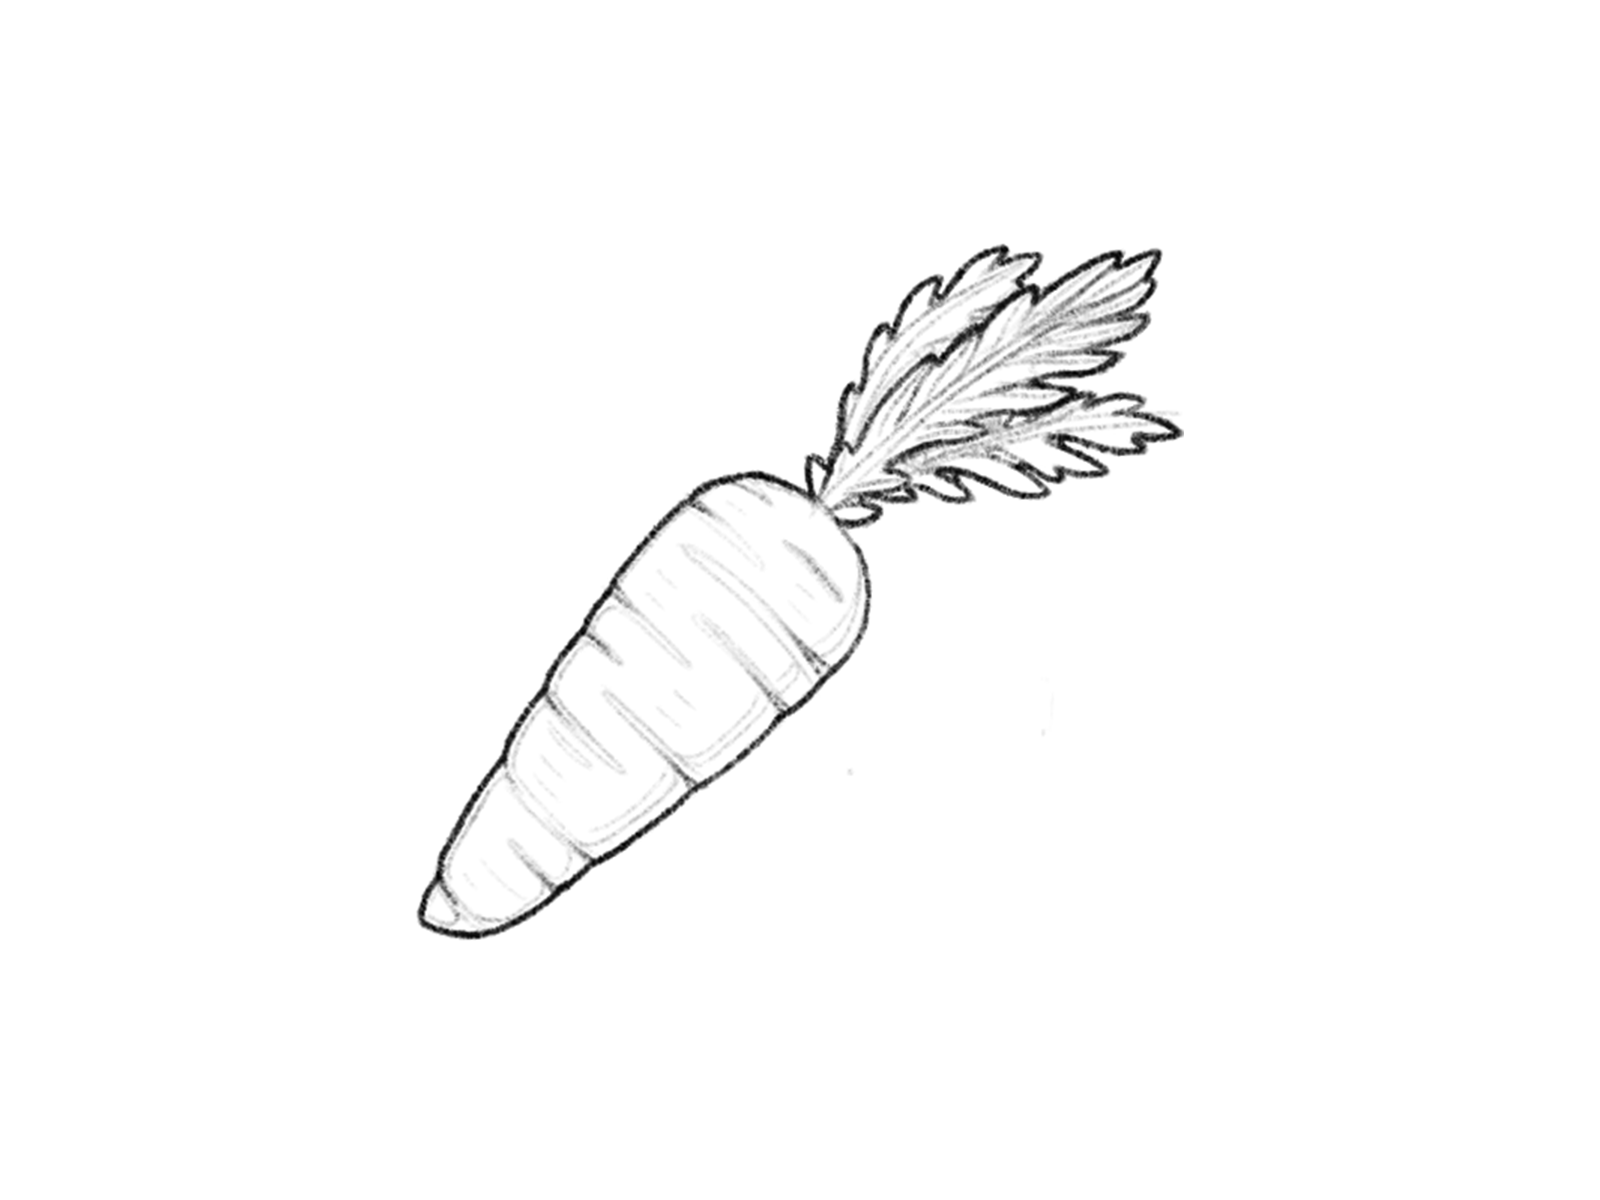 Carrots - Flying Frog Studio - Drawings & Illustration, Food & Beverage,  Vegetables, Carrots - ArtPal